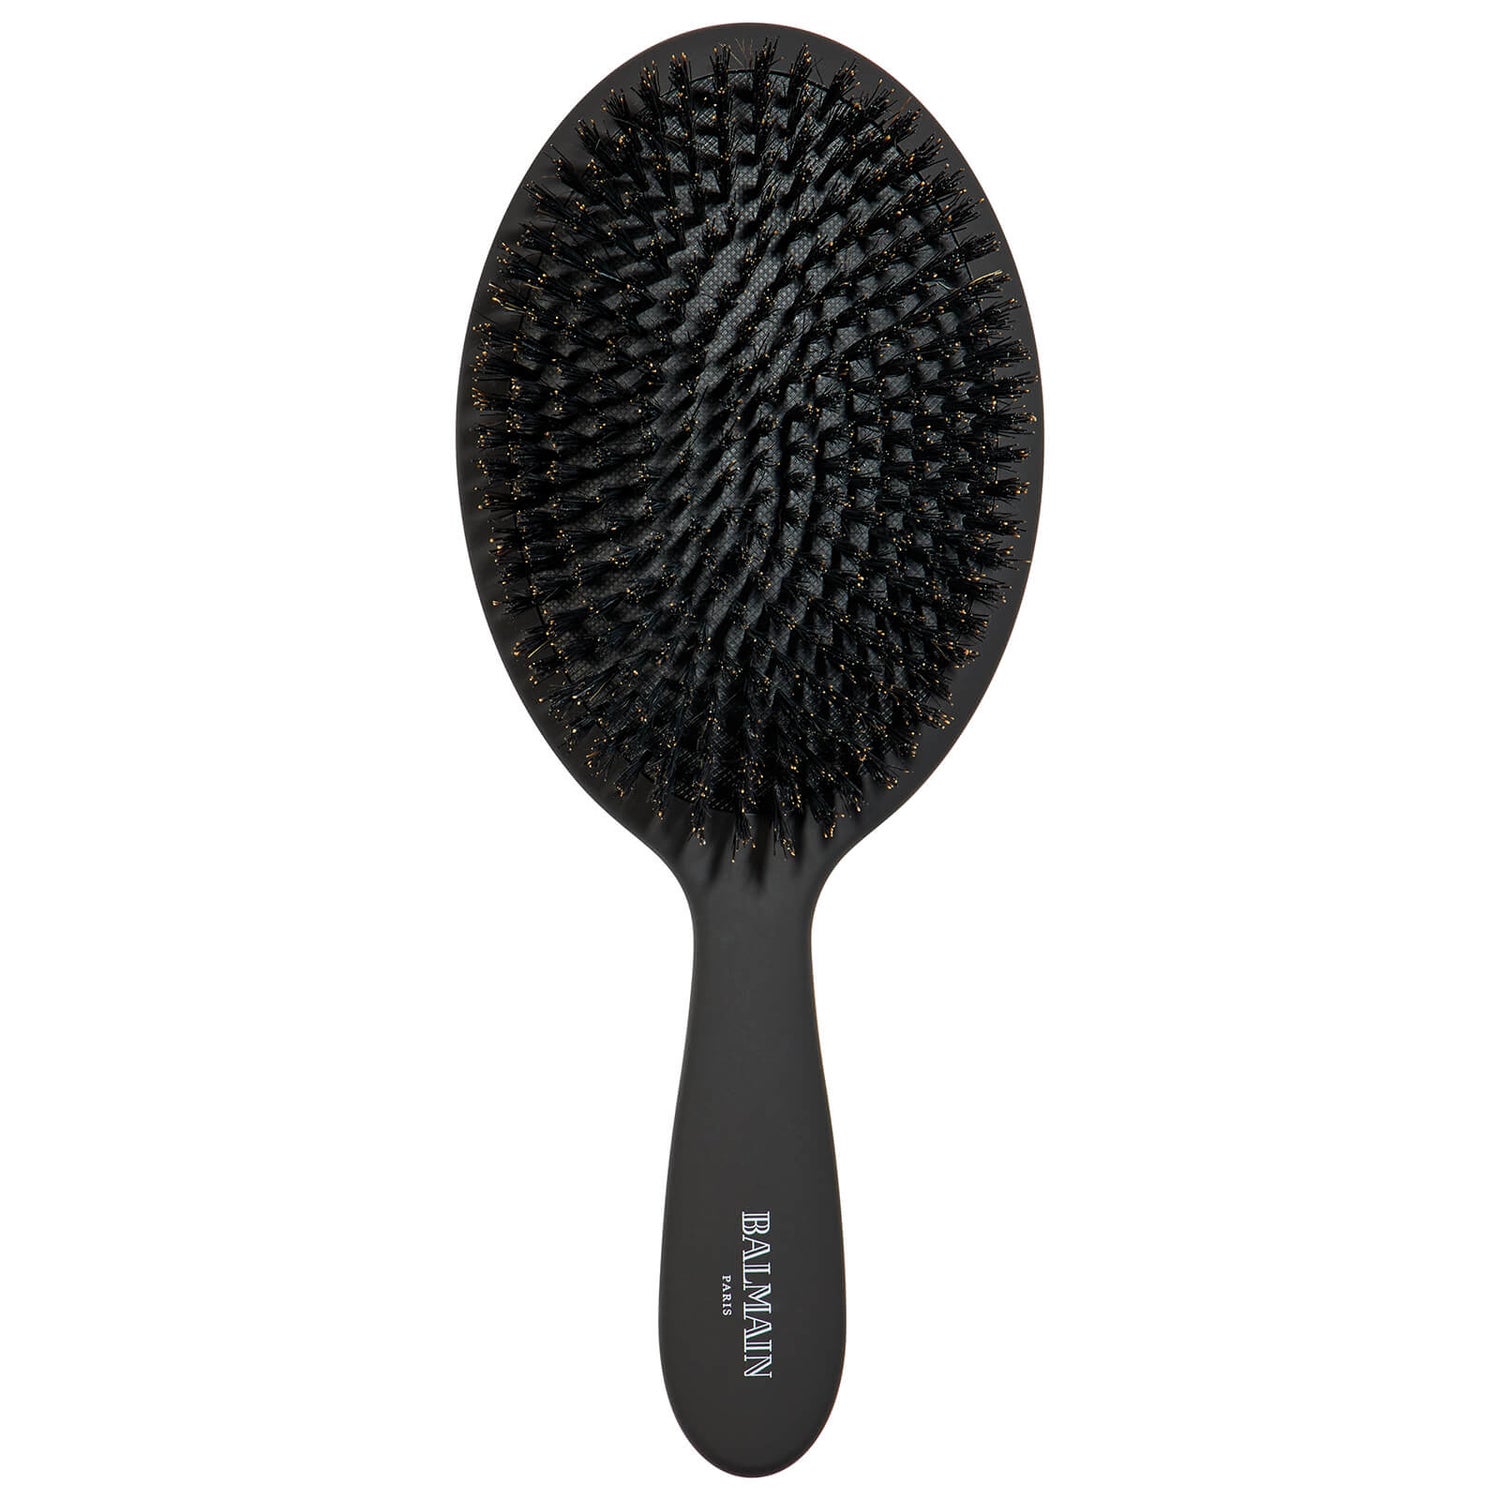 Balmain Luxury Spa Brush with 100% Boar Hair Bristles for Ultimate Shine